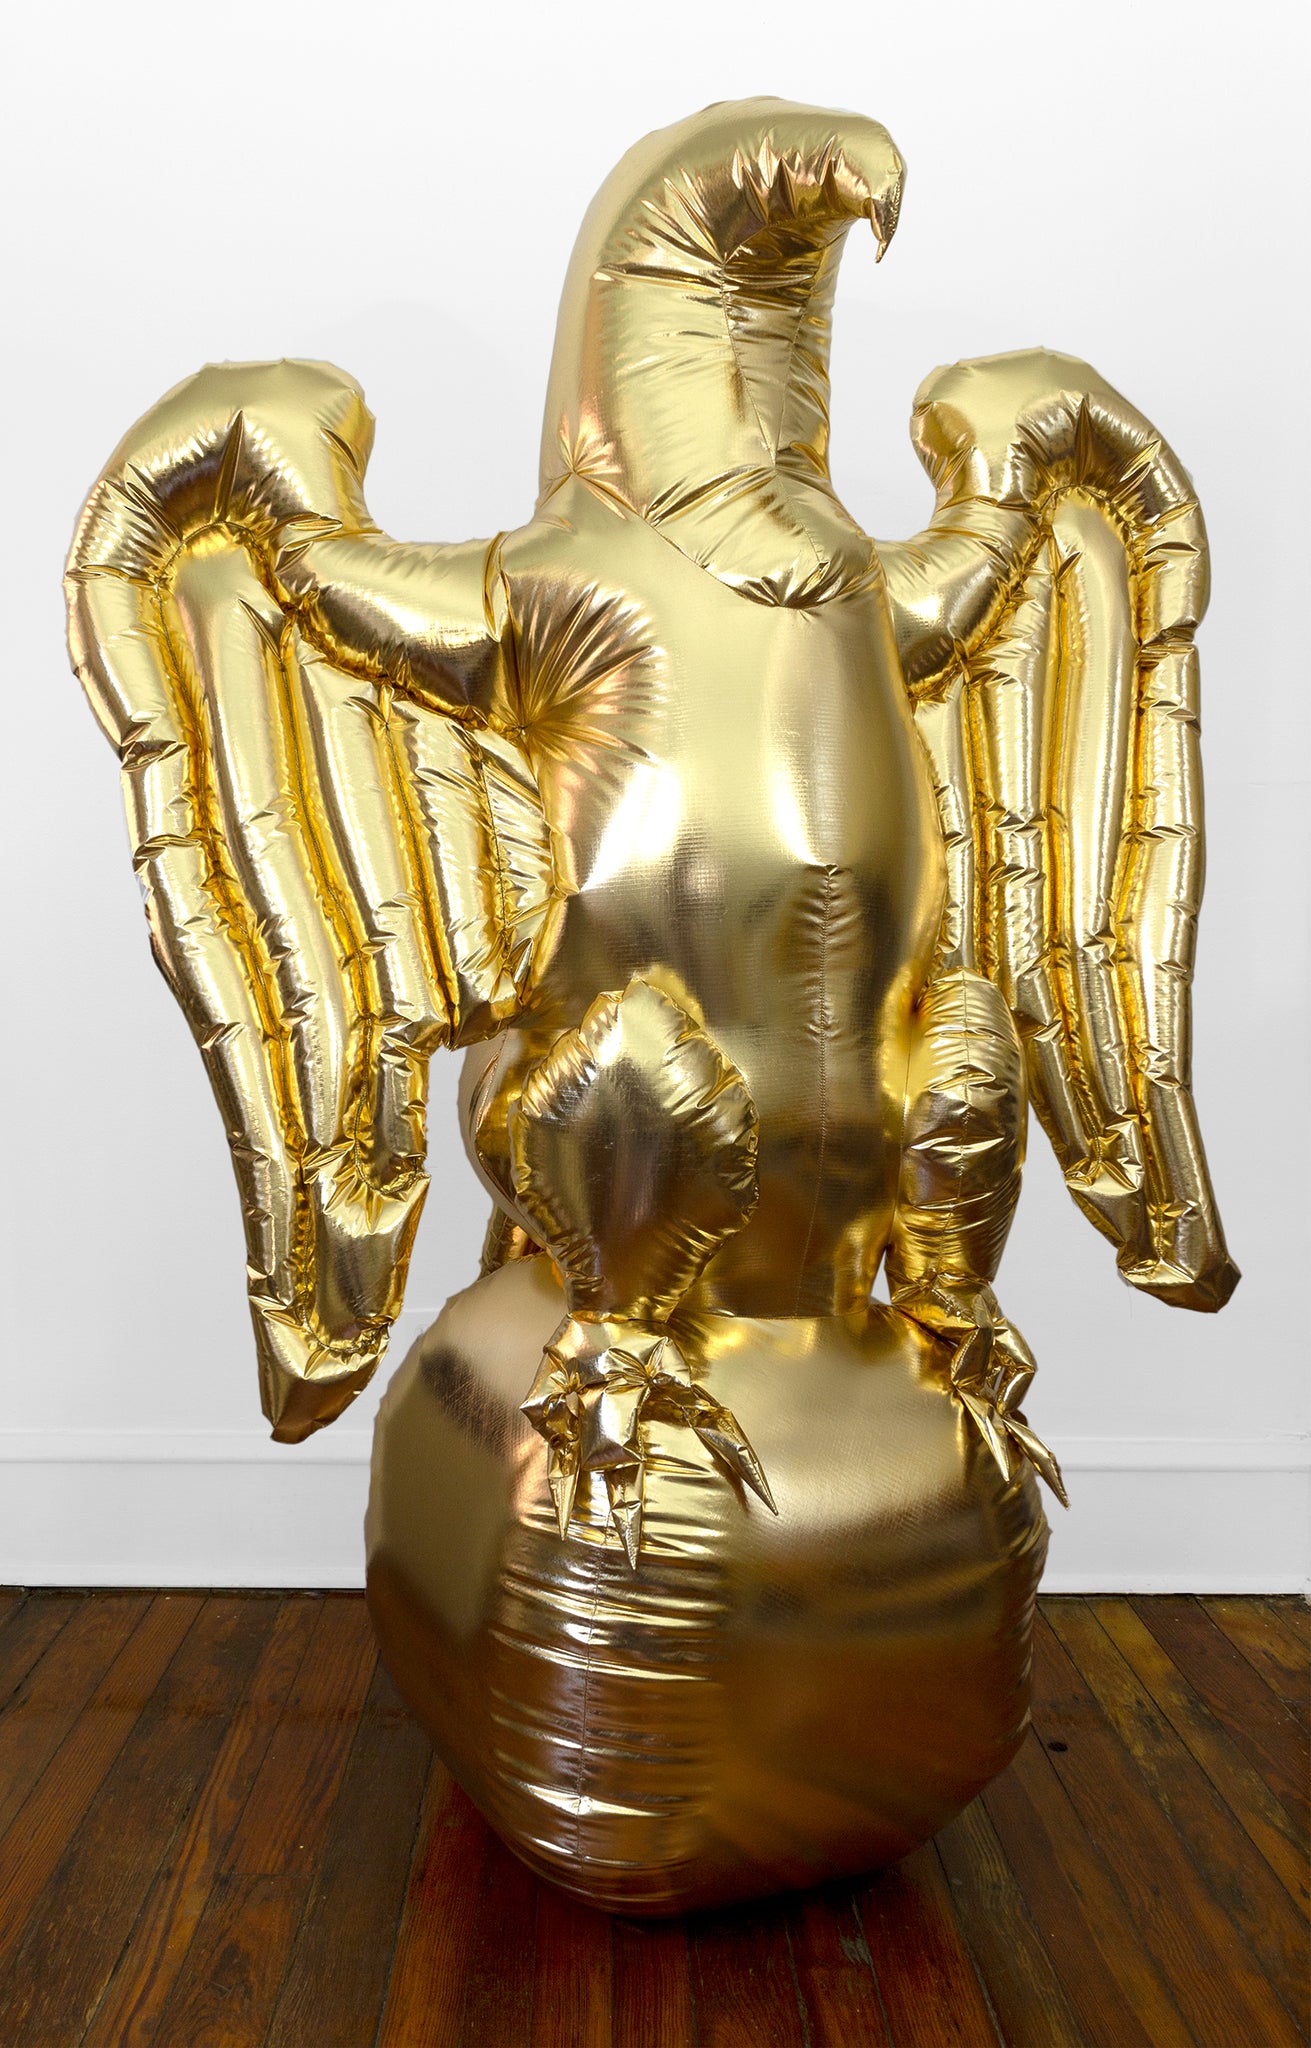 Caroline Charuk, "Federal Style Eagle Ornament"